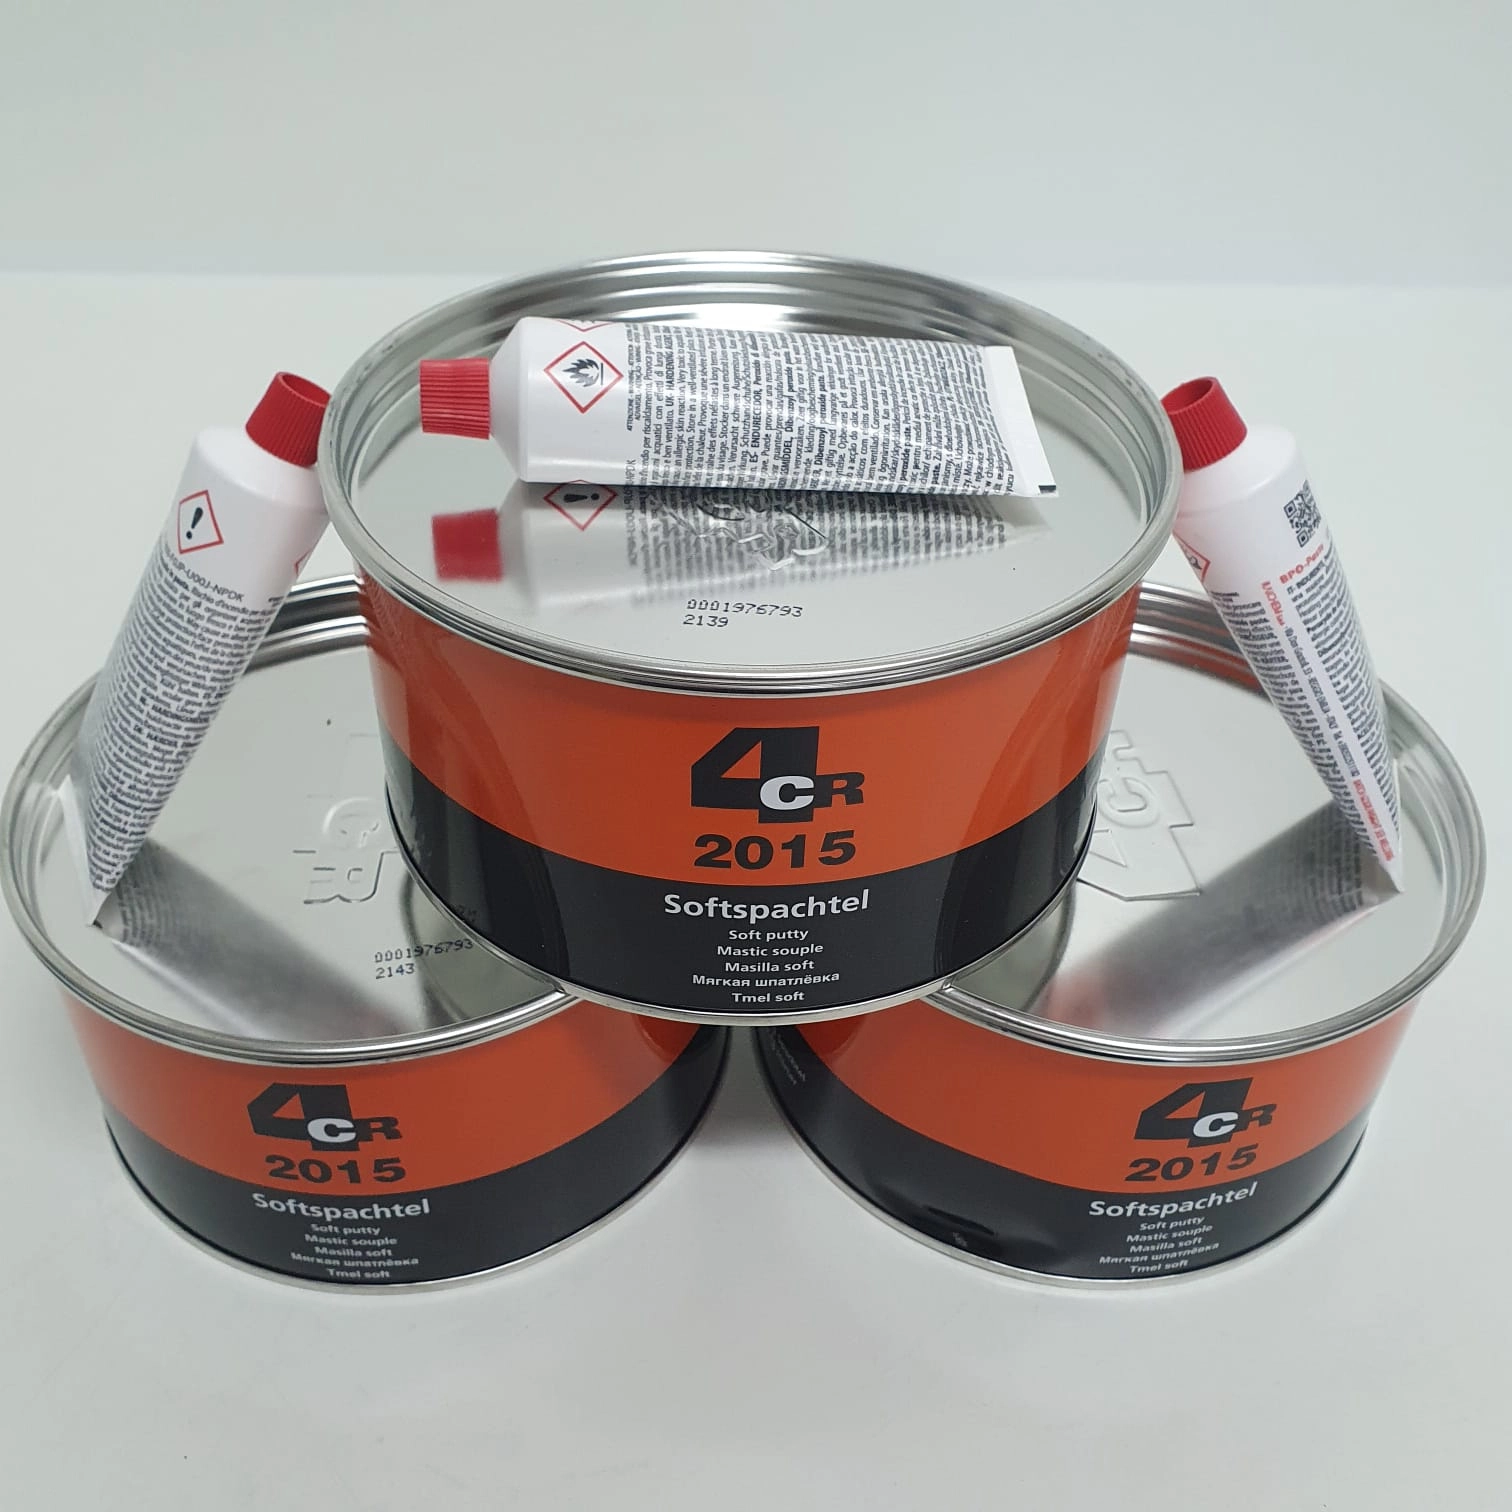 Chit poliesteric soft, 4CR 2015 Soft​​​​​​​Spachtel, contine intaritor, gramaj 1.85 kg [1]